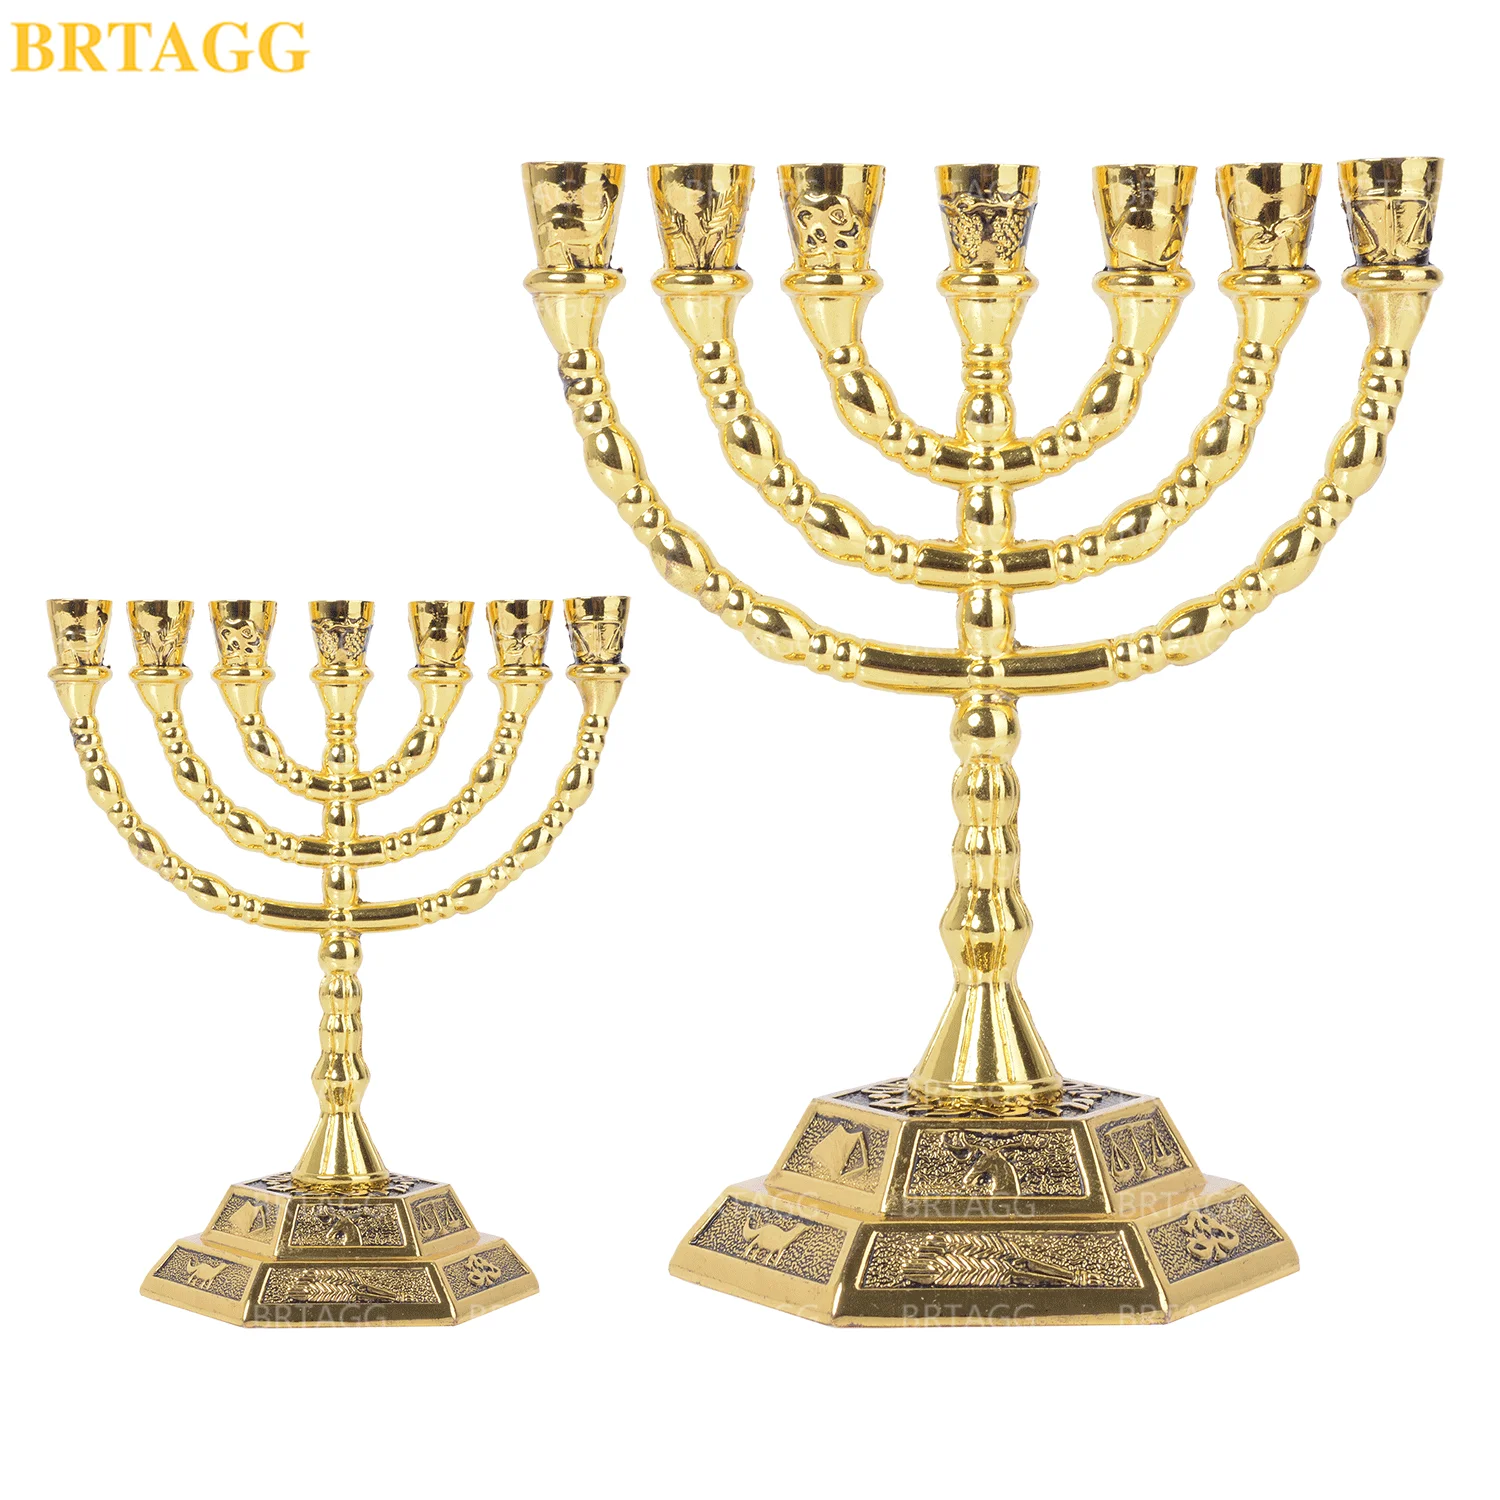 BRTAGG Menorah 12 племен Израиля Менора храм jerusма 7 веток еврейские подсвечники подарок